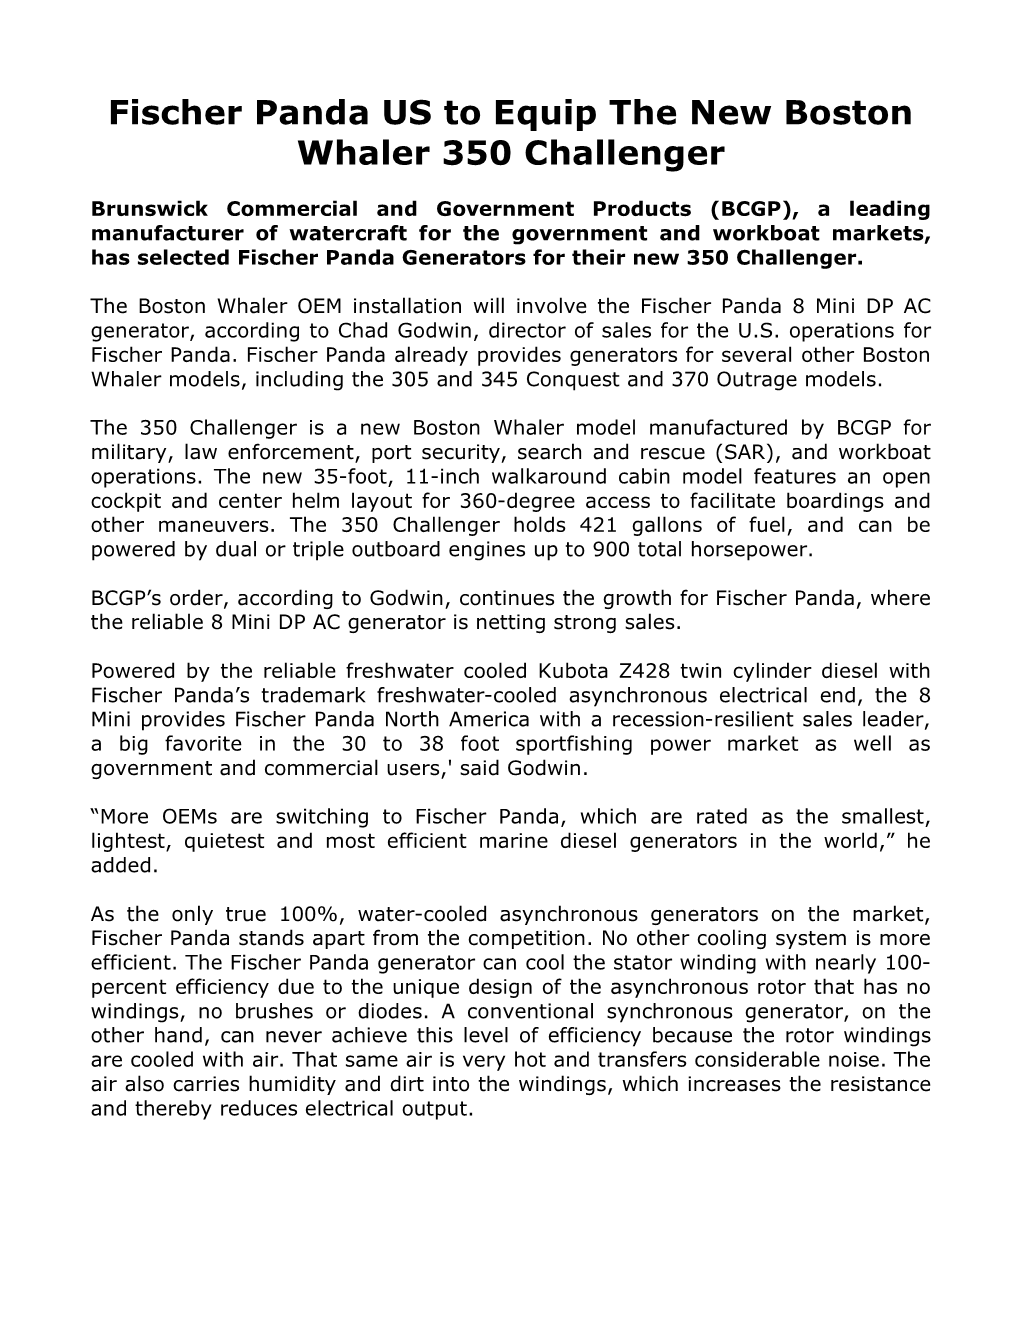 Fischer Panda US to Equip the New Boston Whaler 350 Challenger